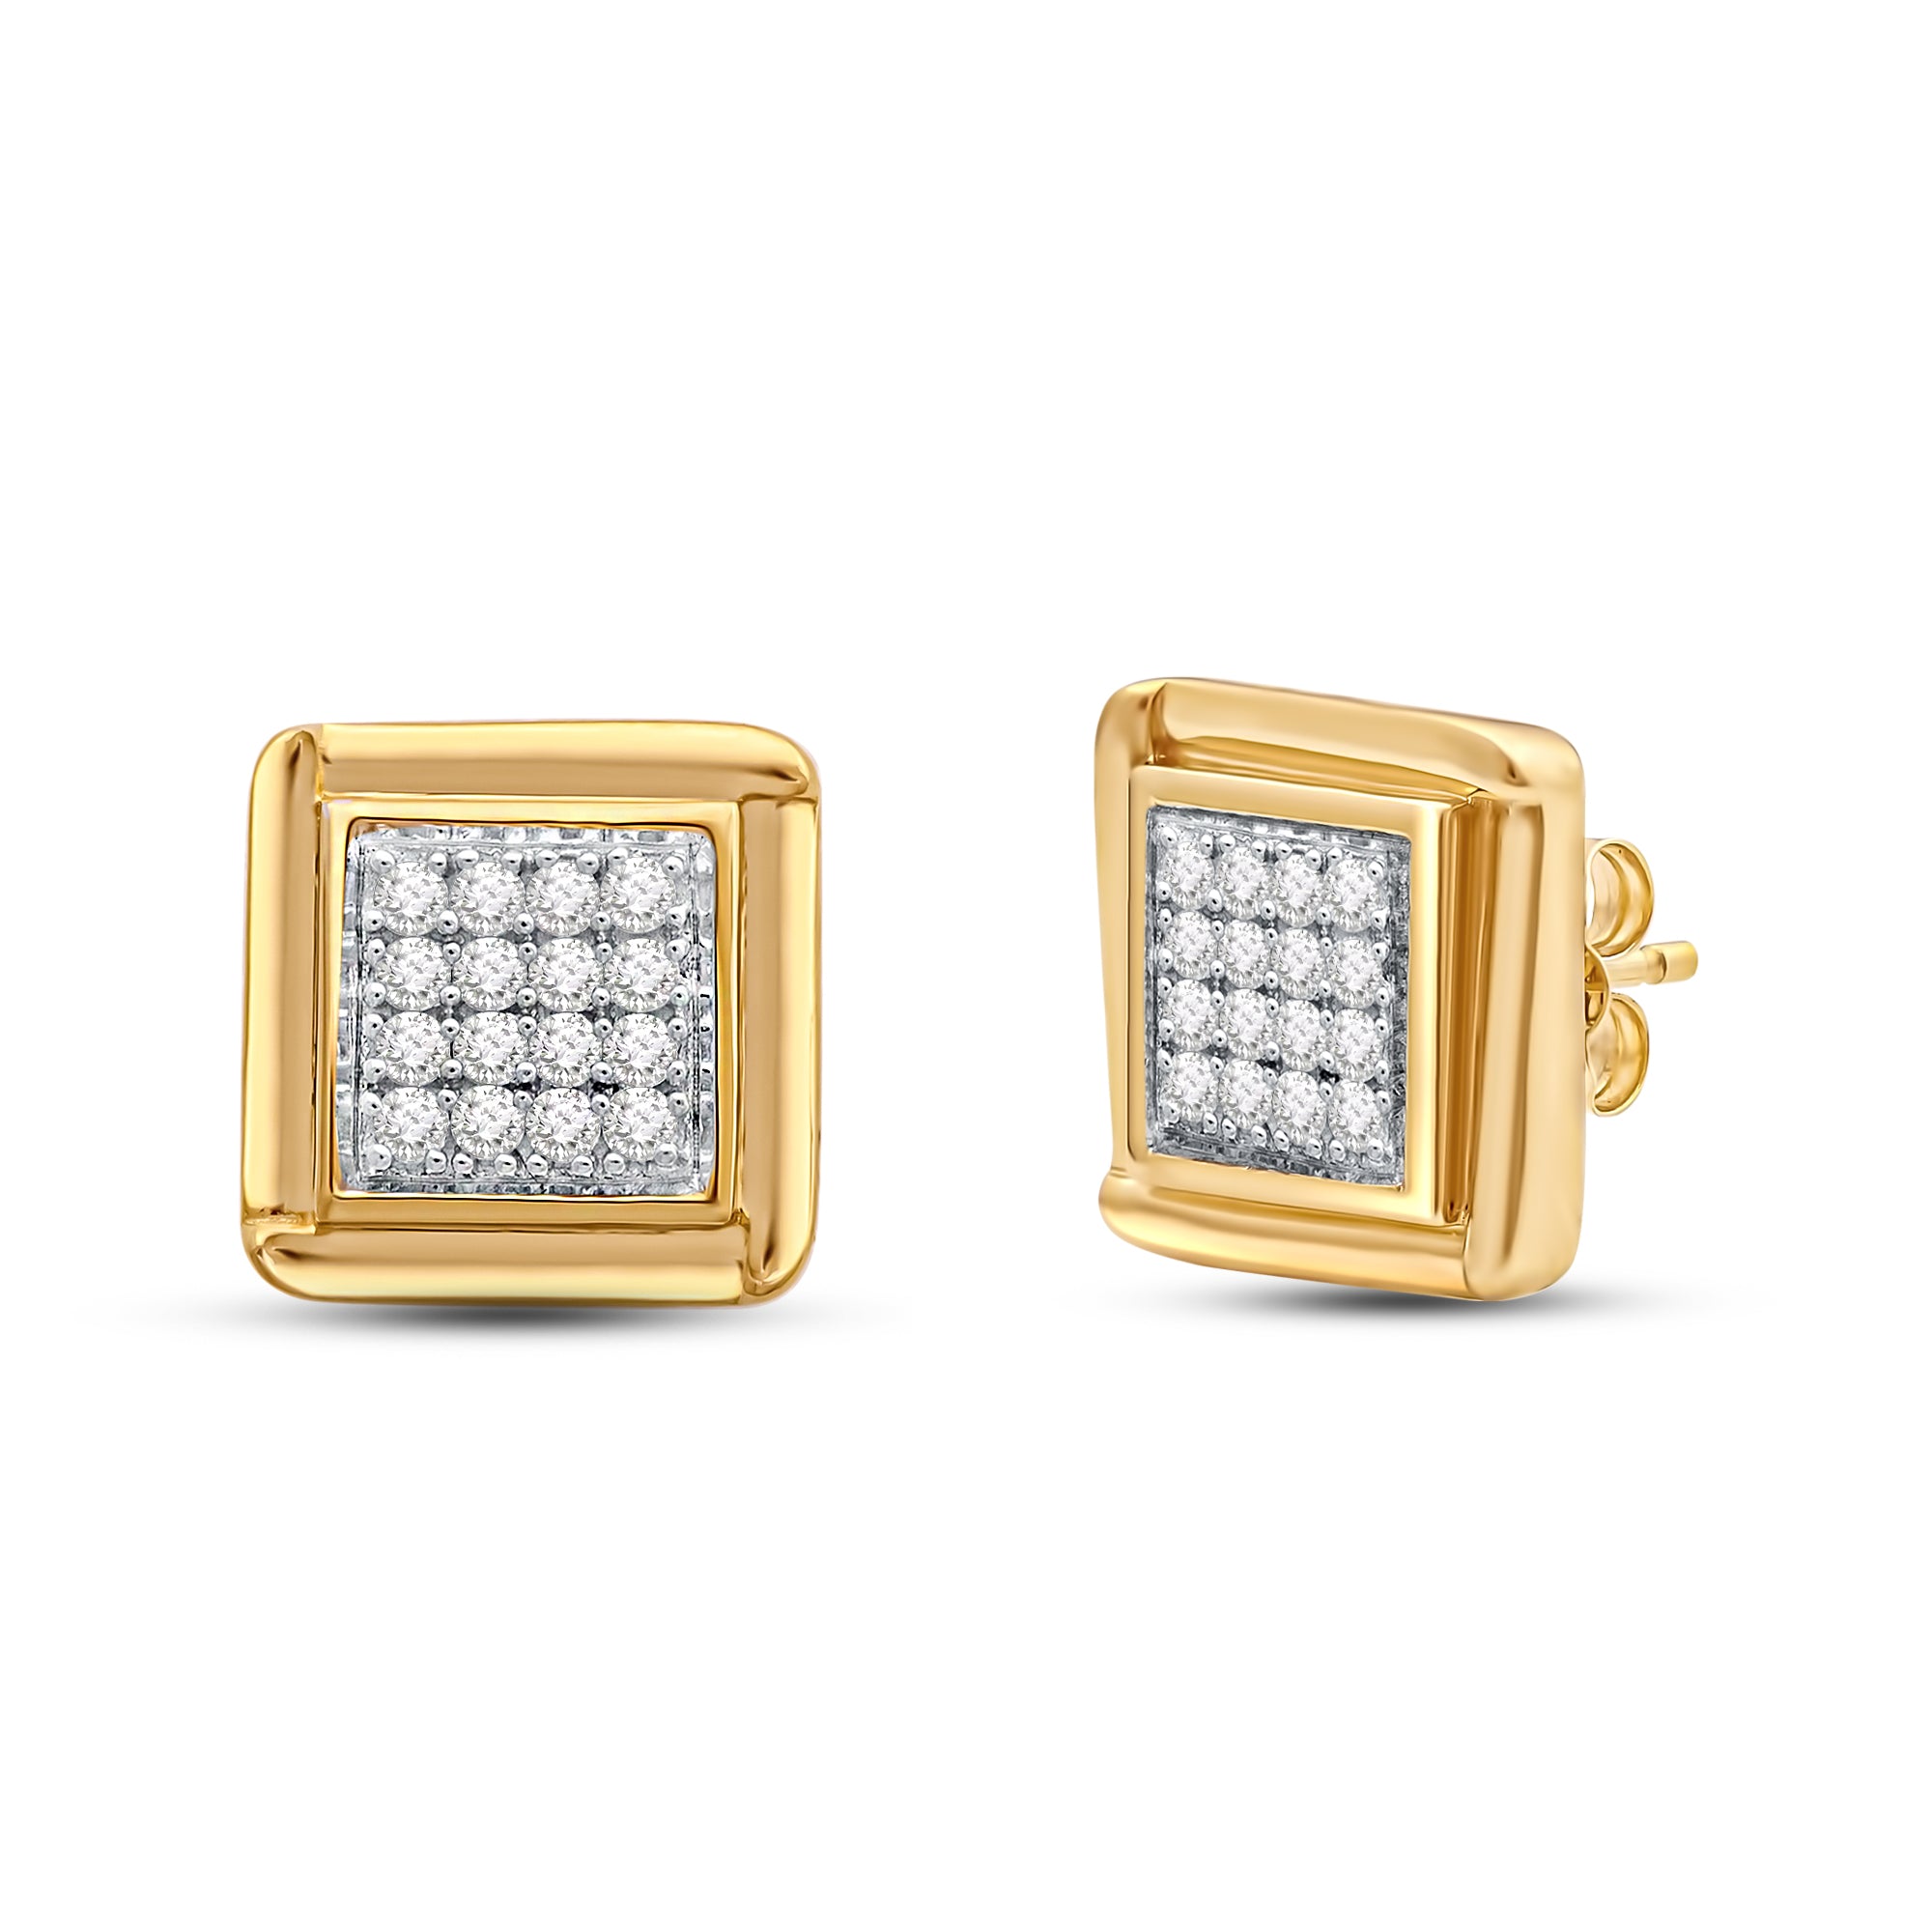 Buy Gold Earrings for Men by Peora Online | Ajio.com